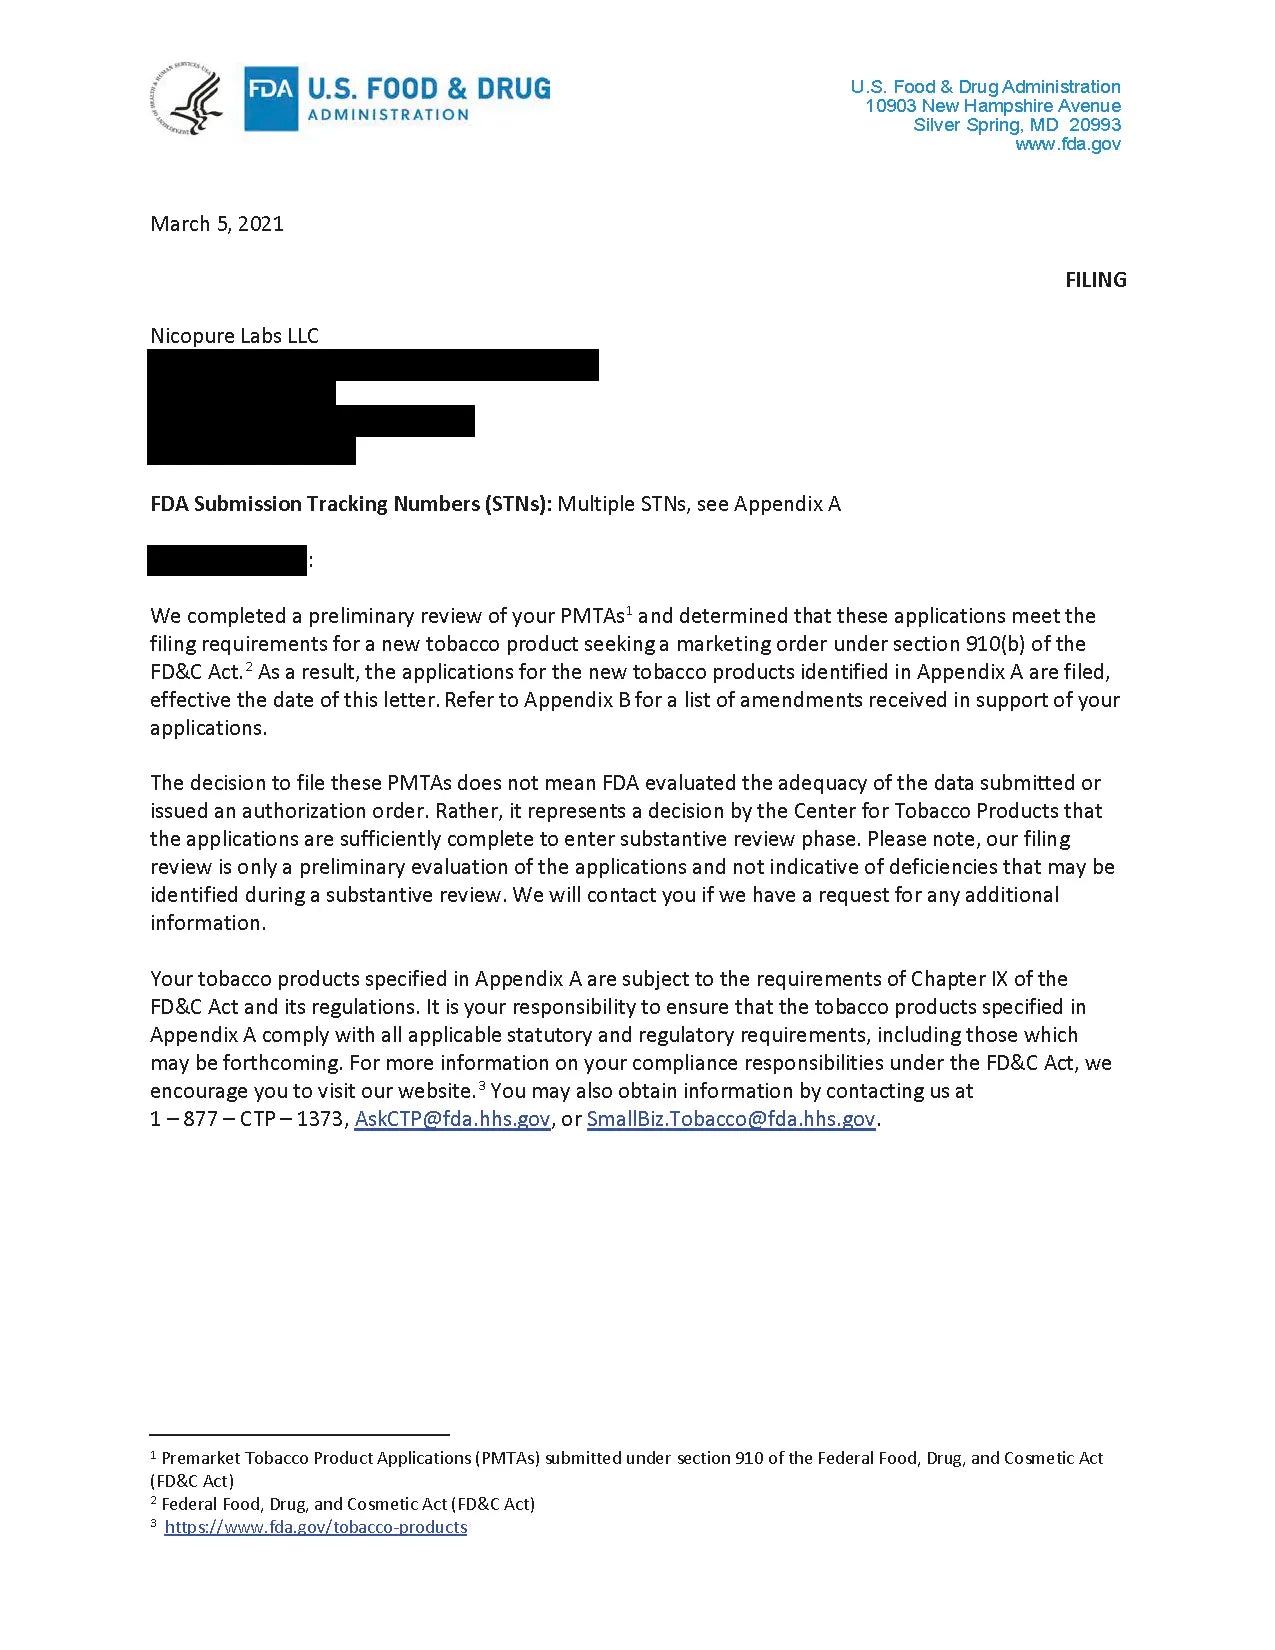 FDA Acceptance Letter 01